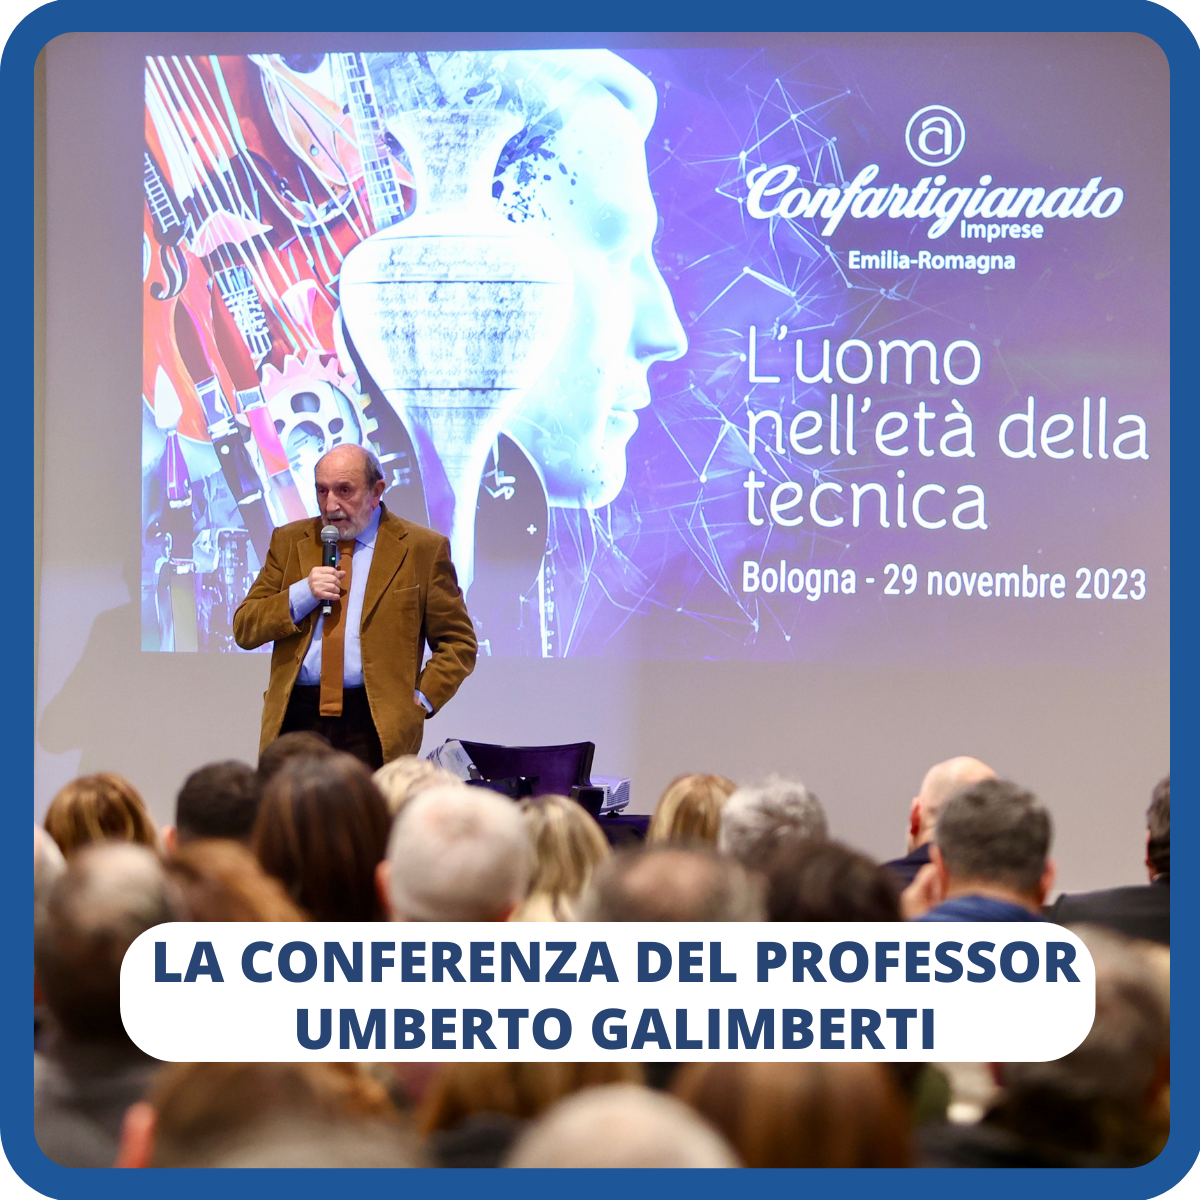 umberto galimberti conferenza bologna 29 novembre 2023 confartigianato emilia romagna